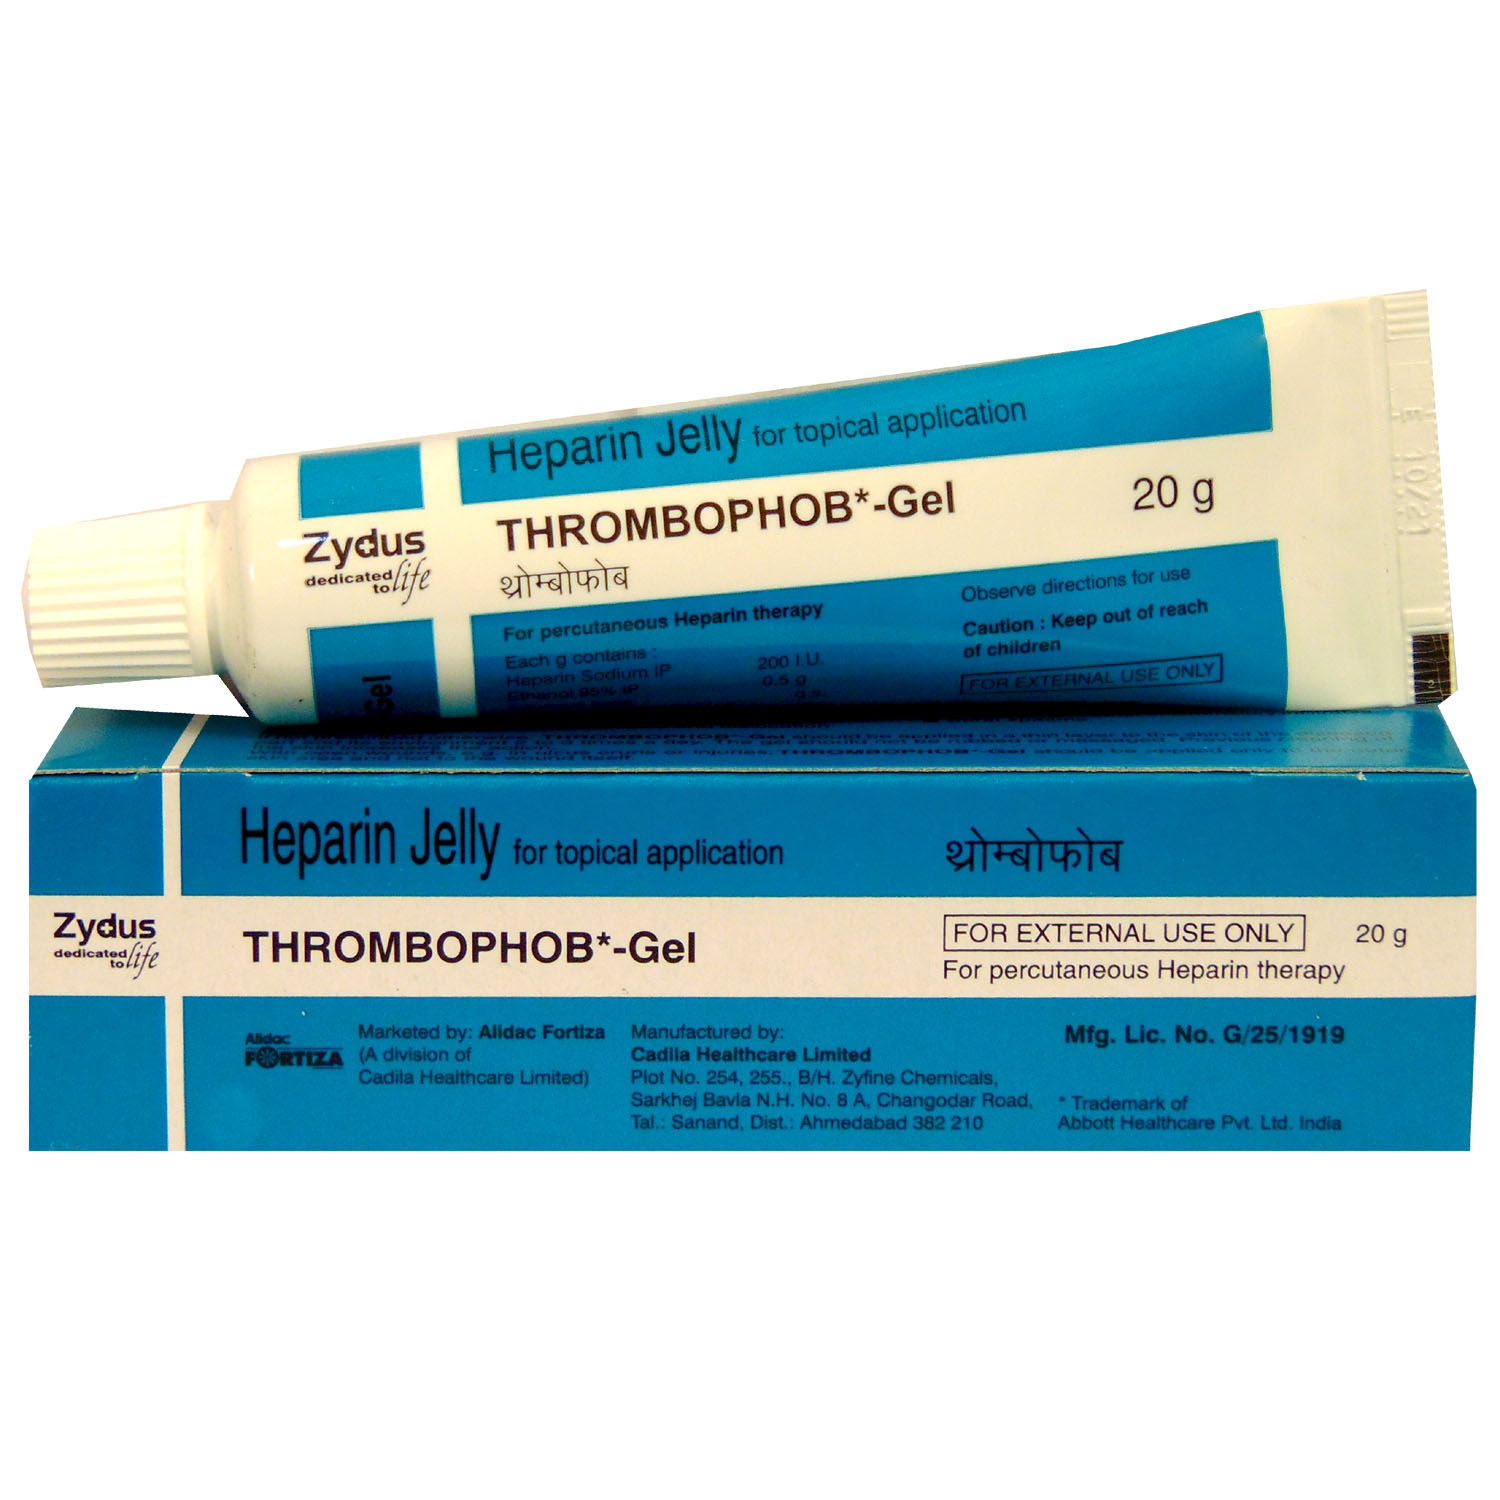 Thrombophob Gel 20gm Price, Uses, Side Effects - Apollo 24|7